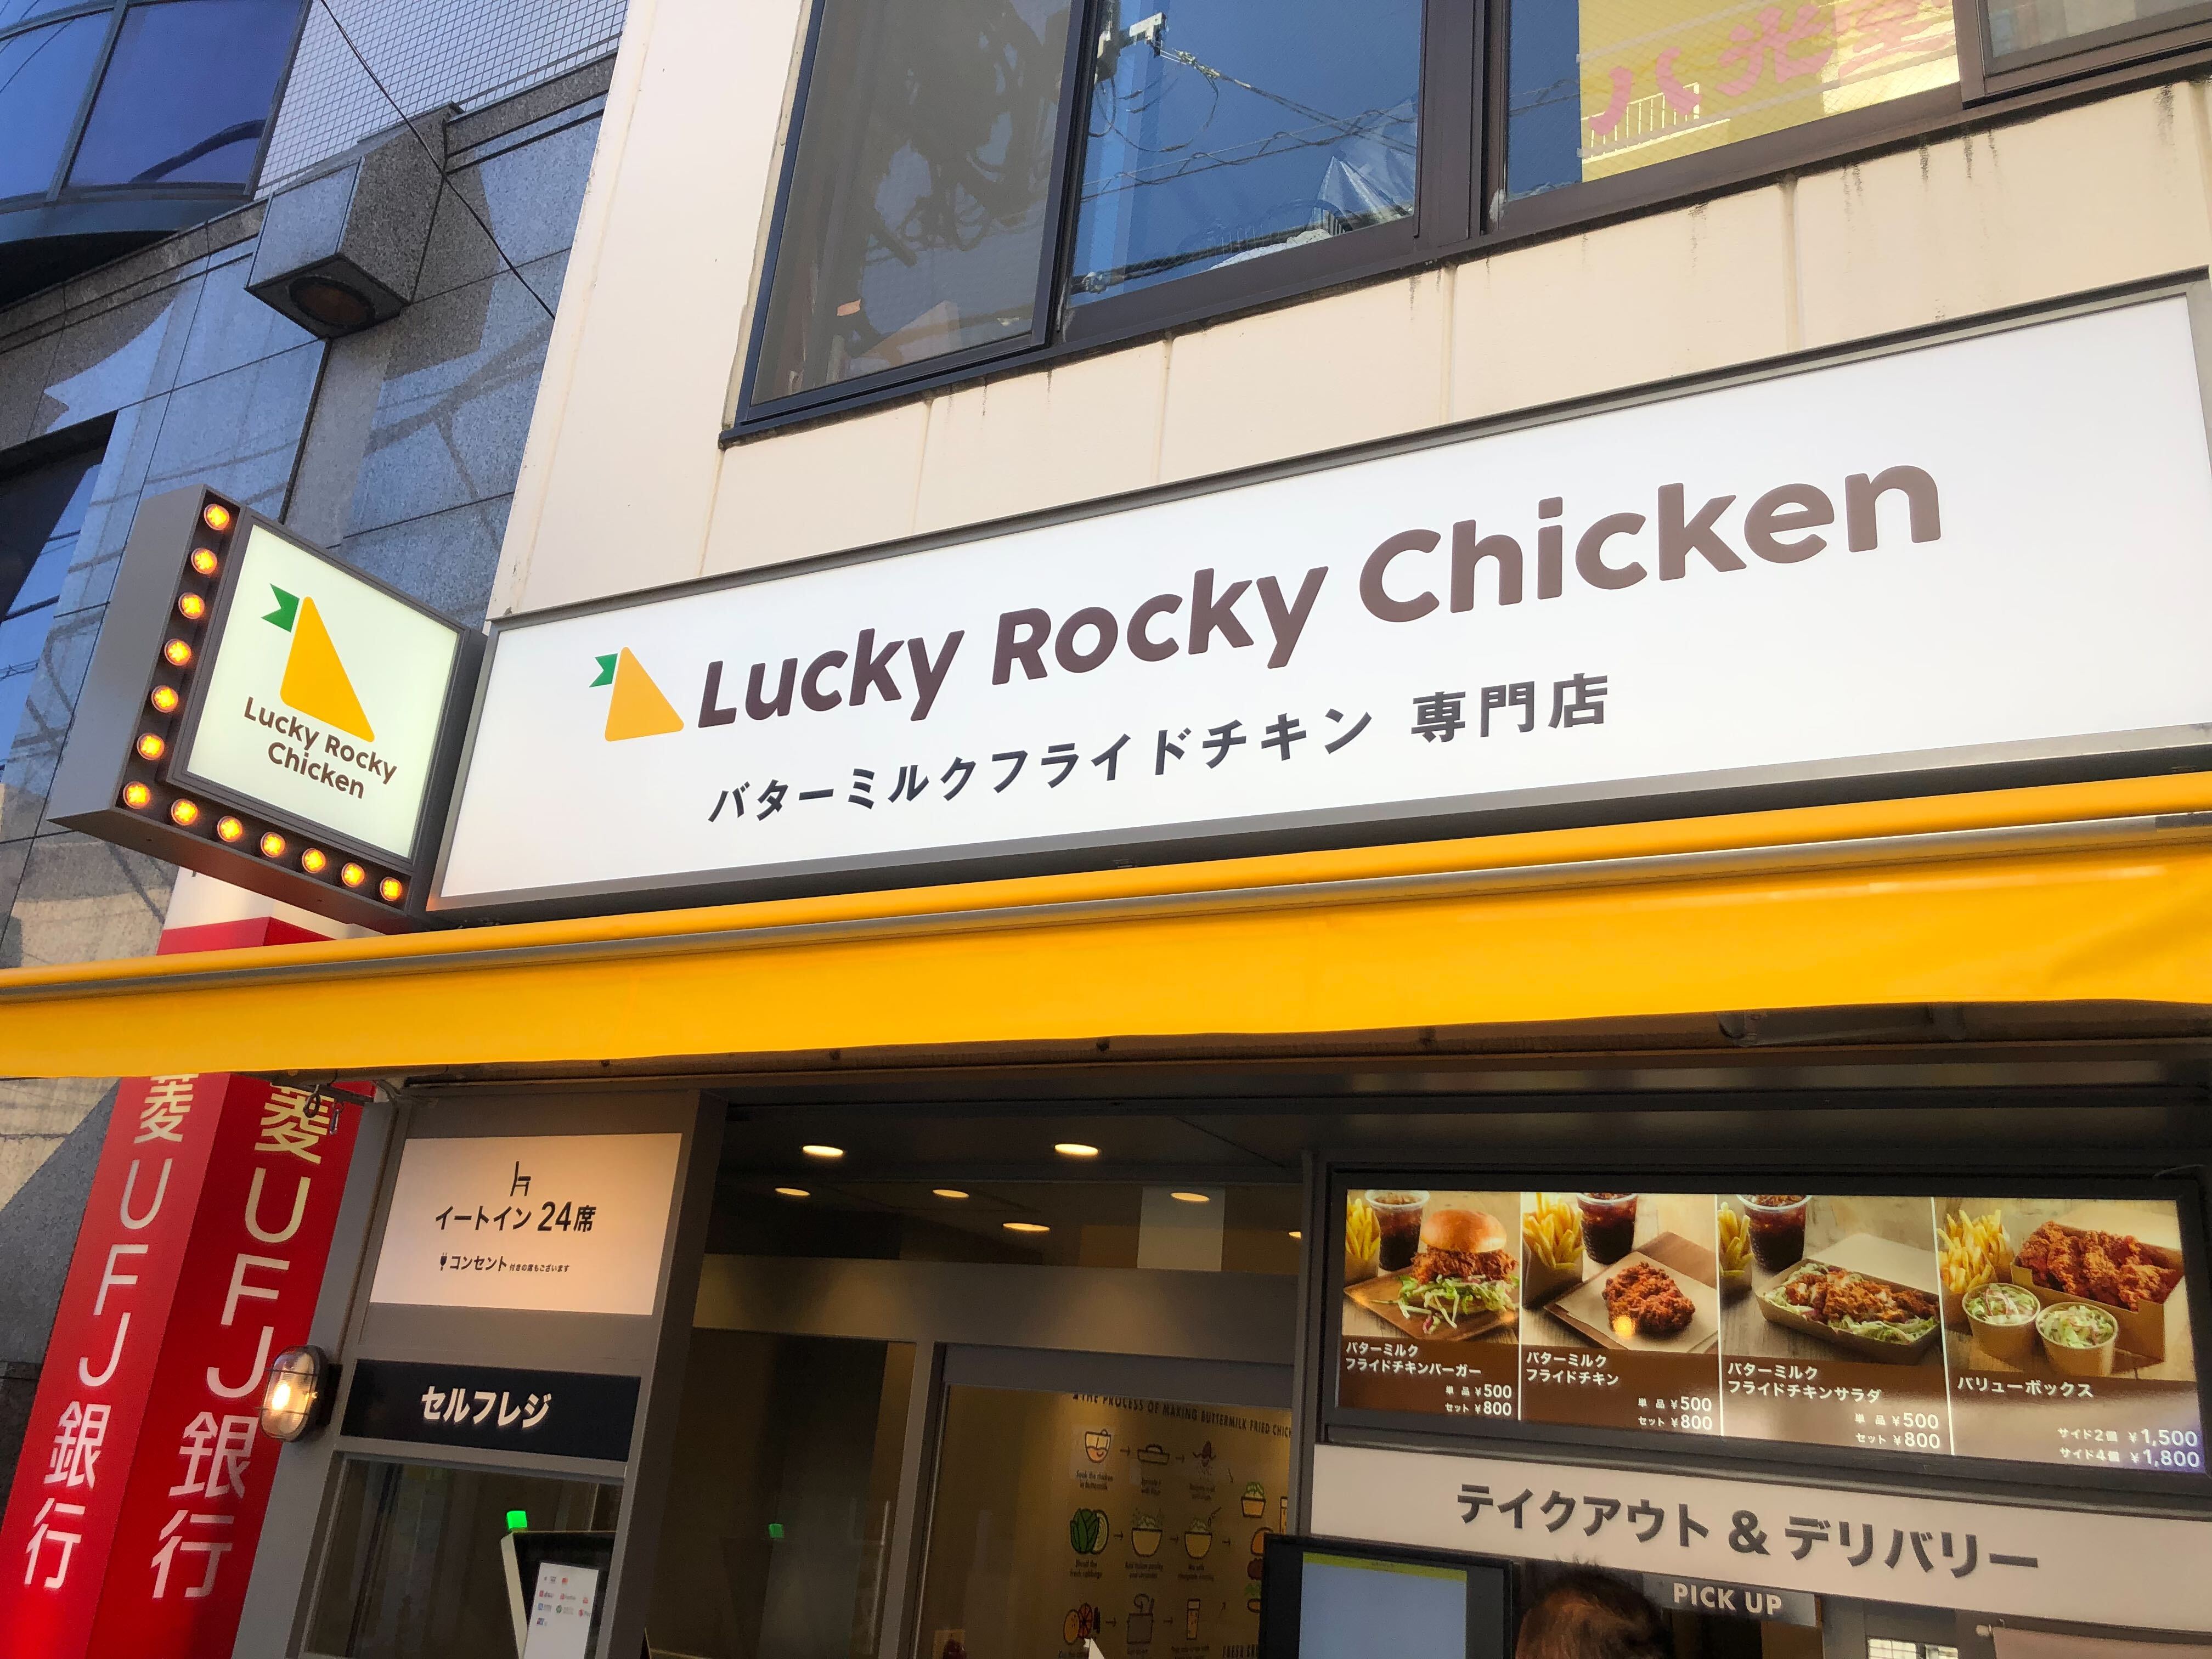 Lucky Rocky Chickenの内観・外観